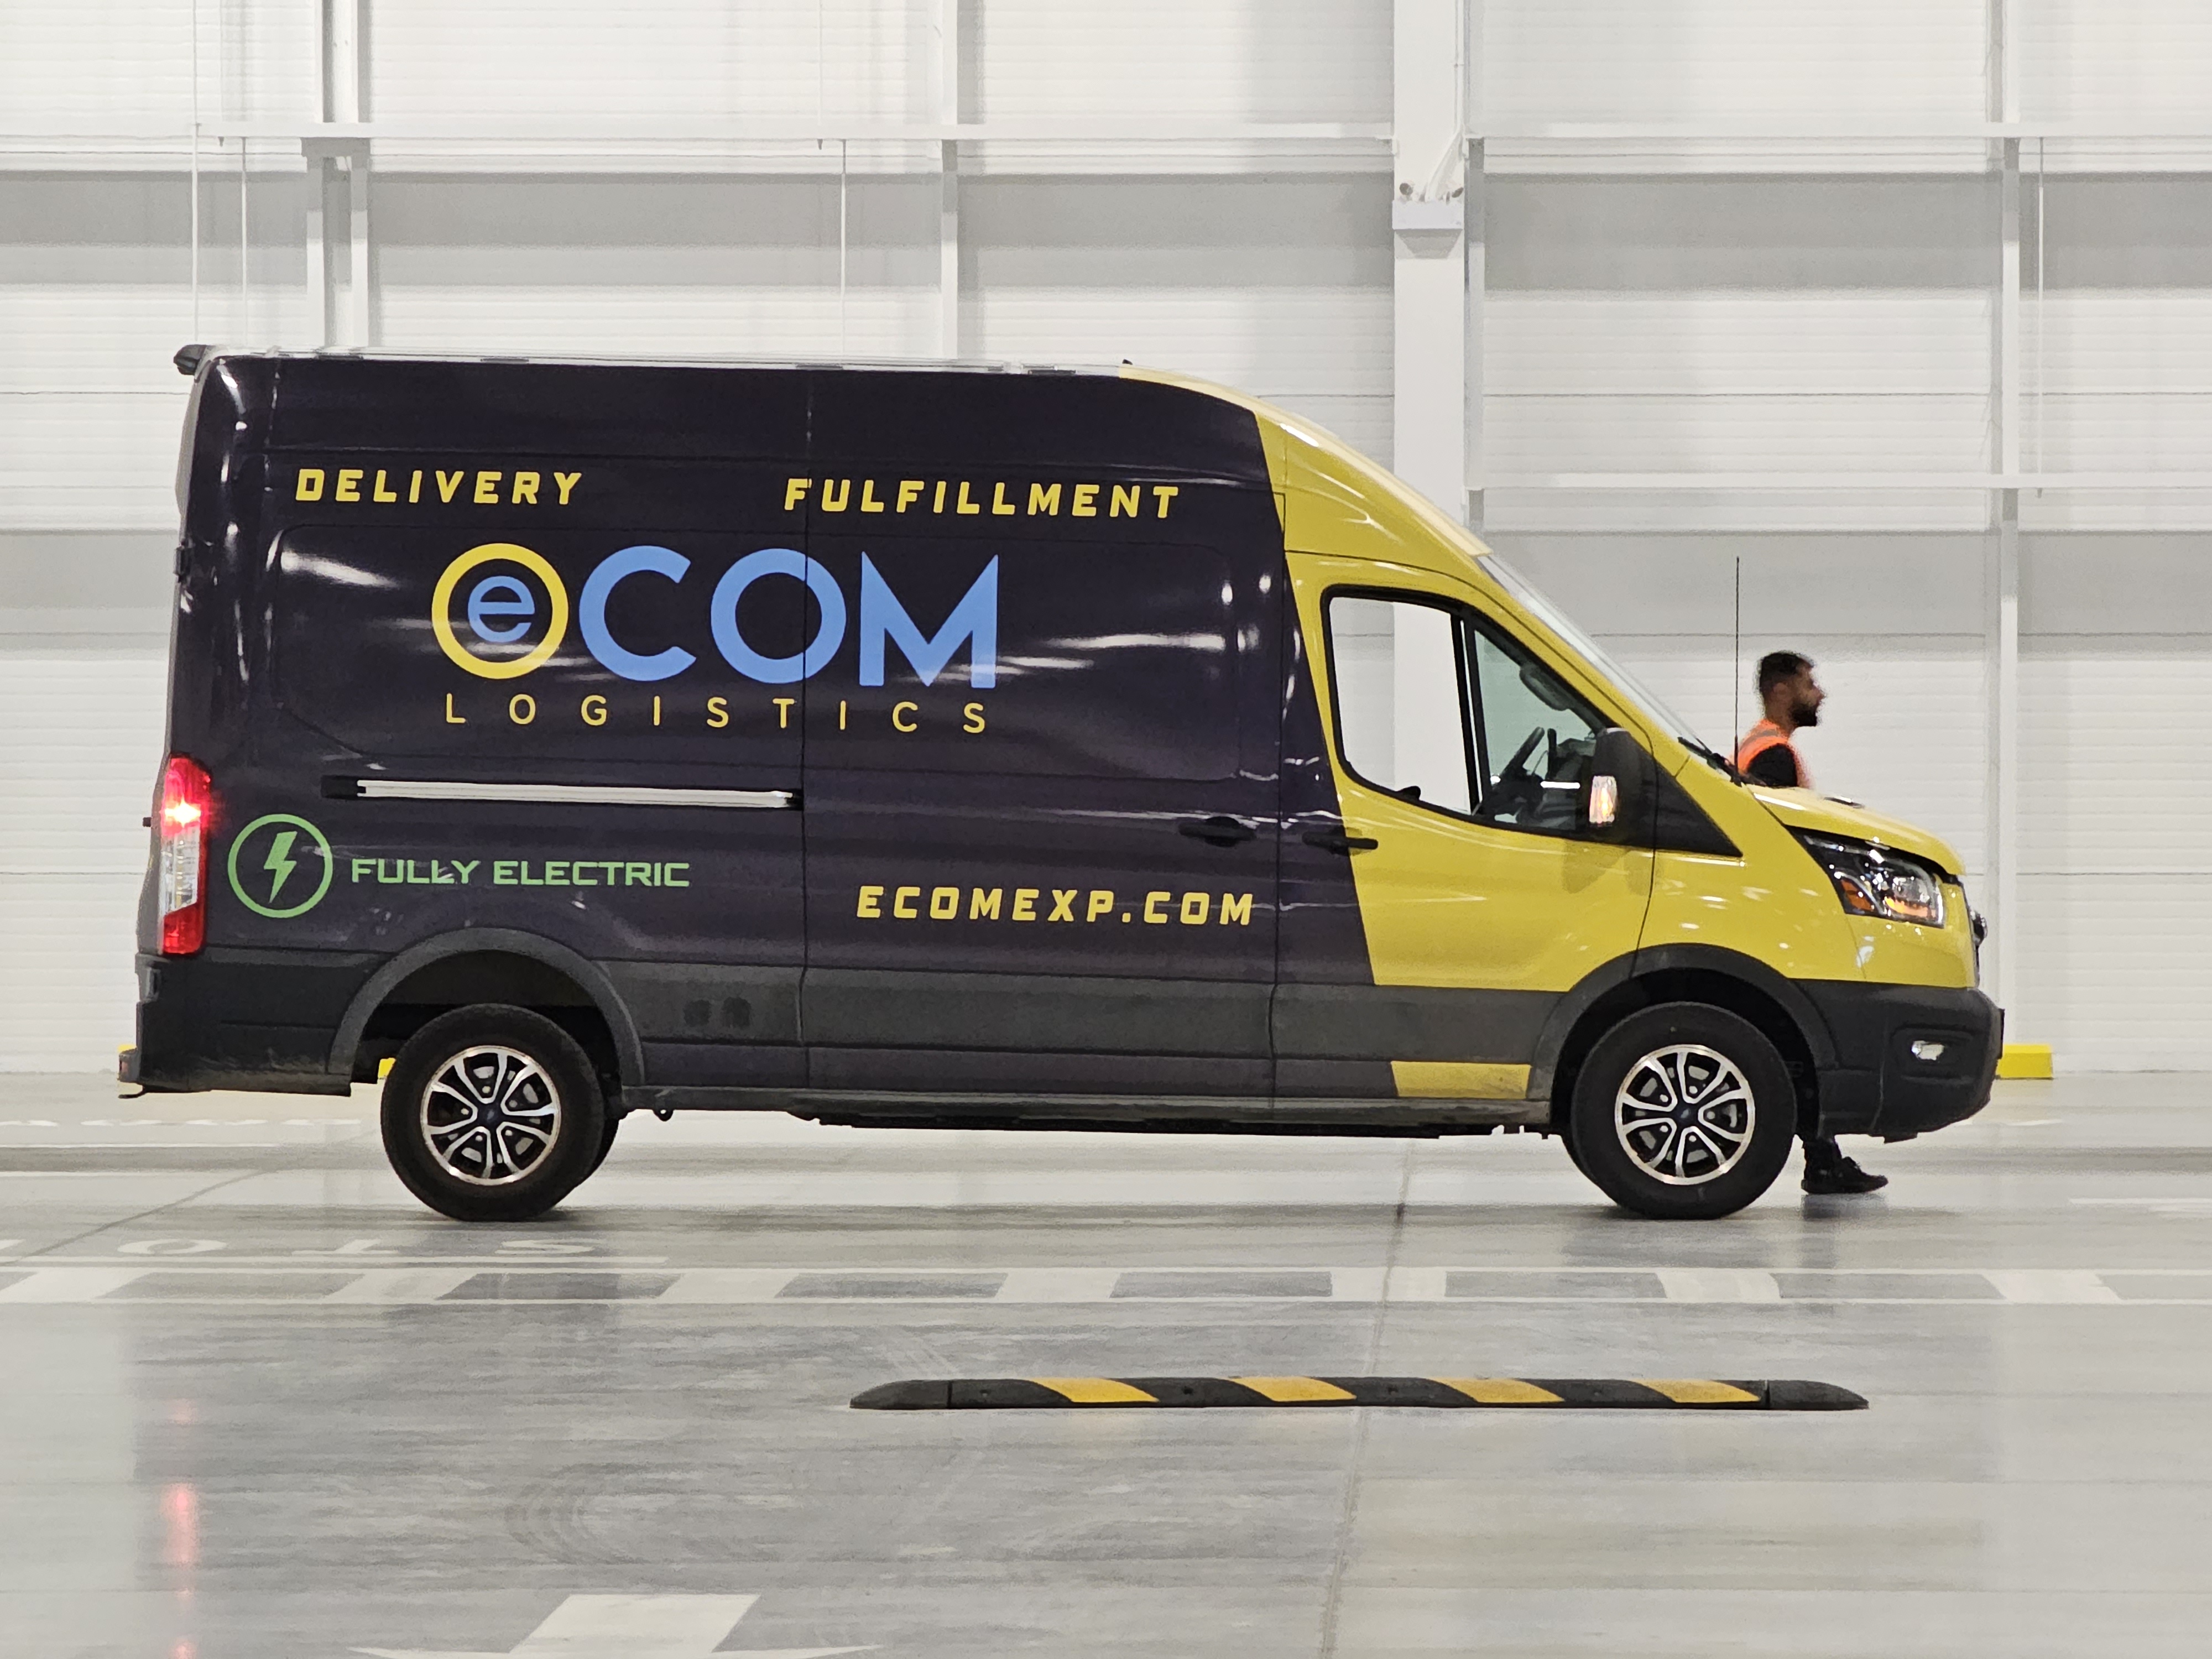 Ecom Logistics electric delivery Vehicle